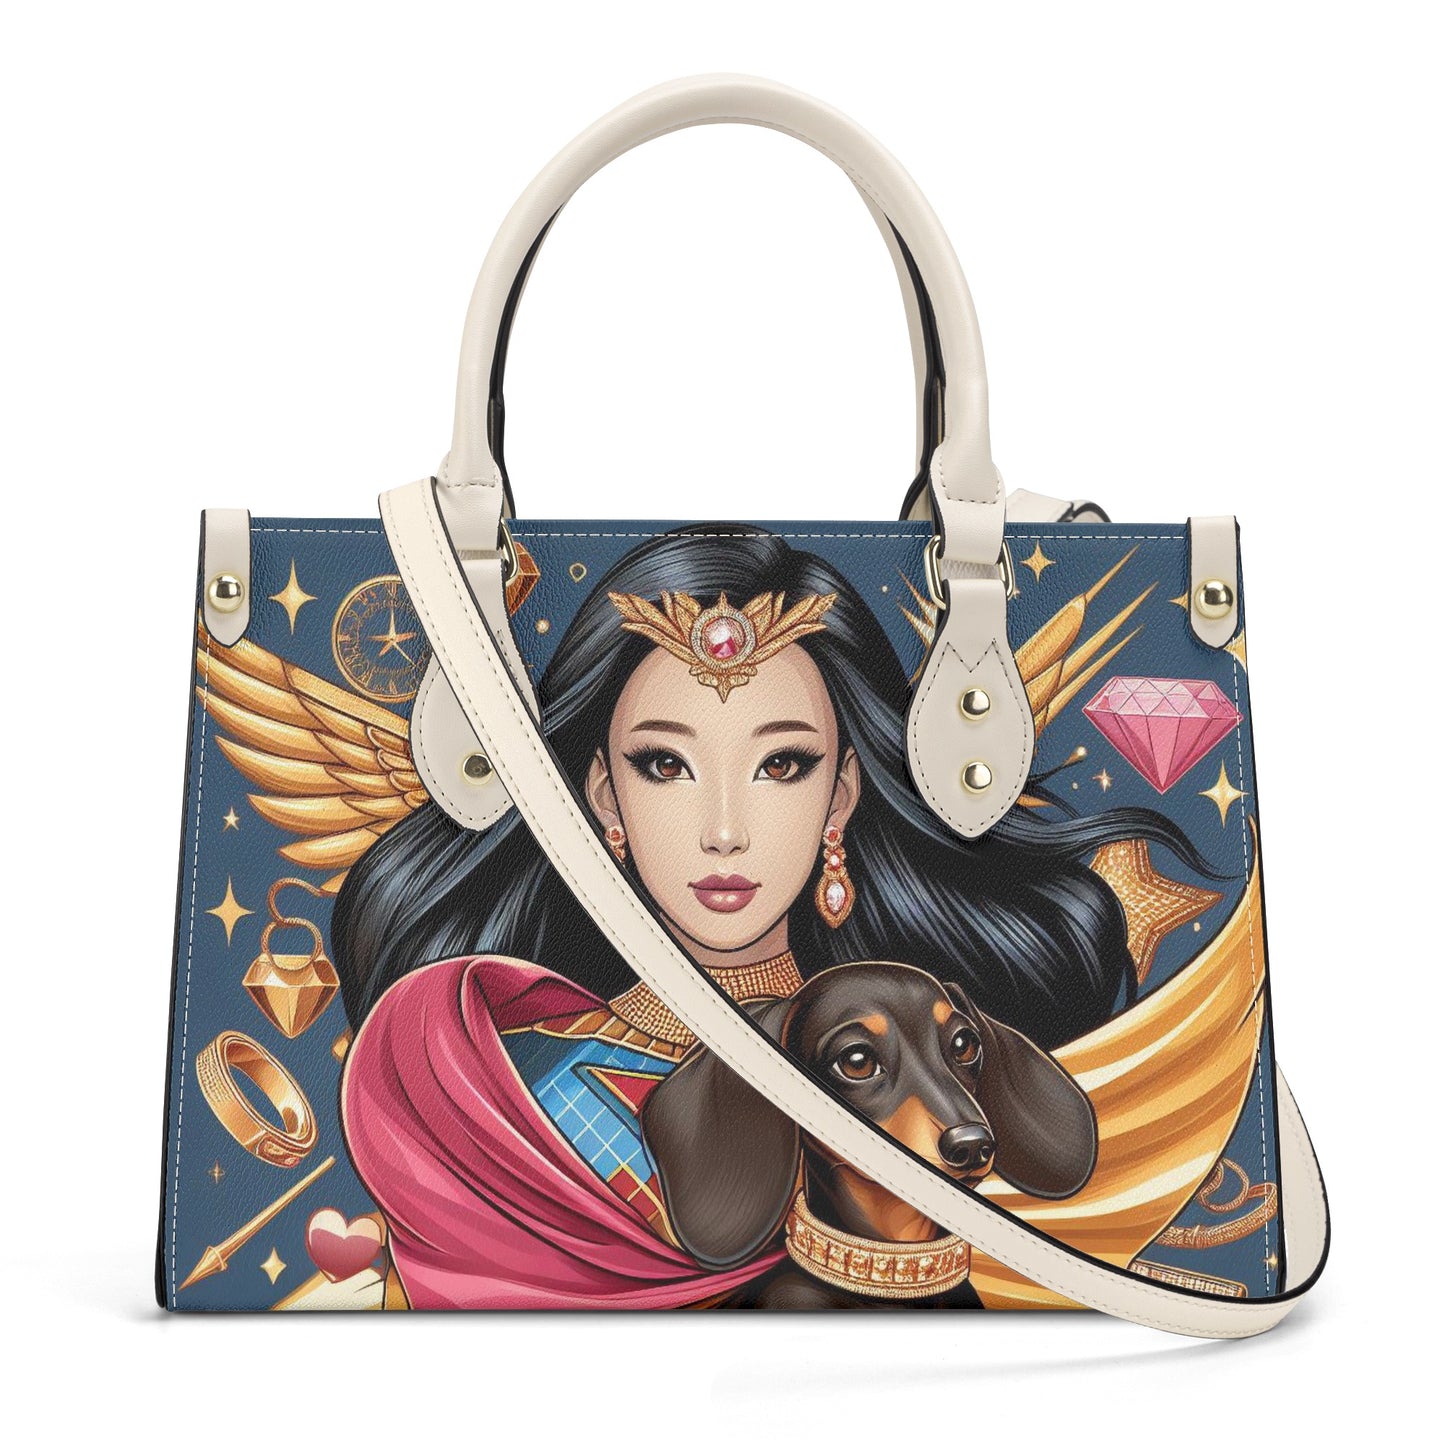 Andy - Luxury Women Handbag